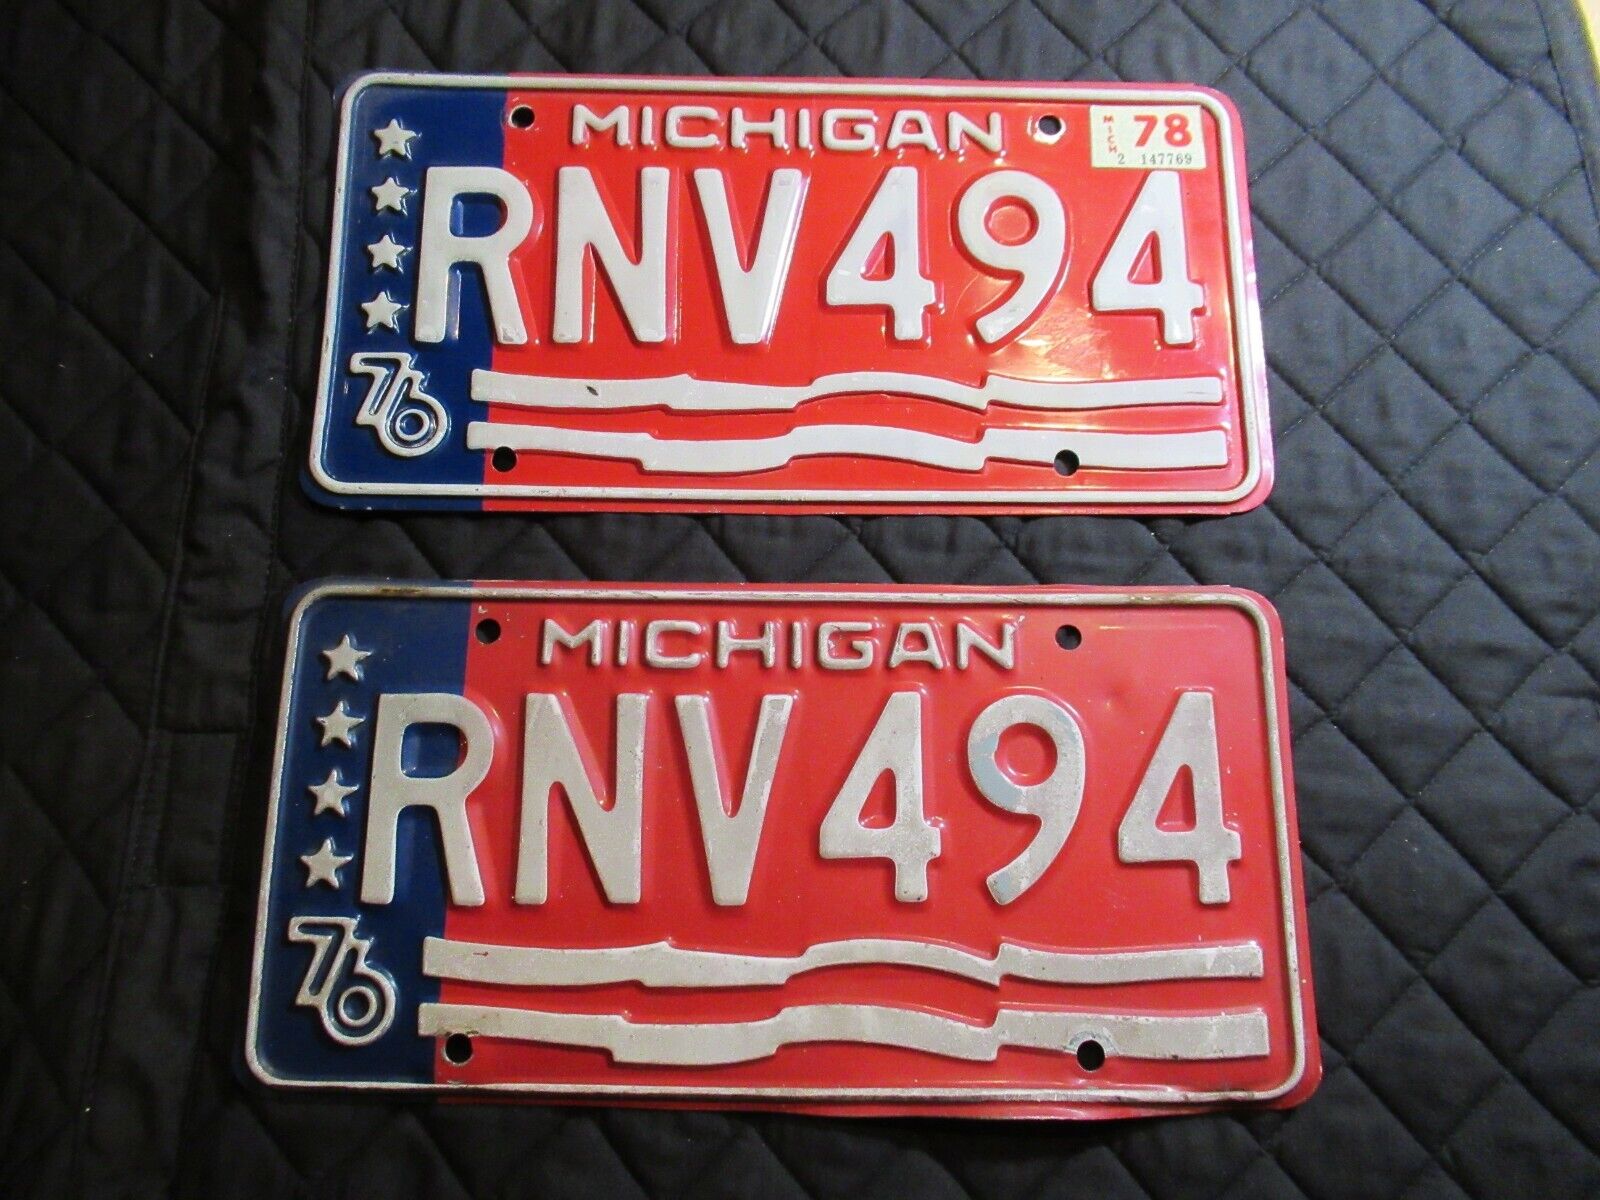 1976 Michigan Bicentennial License Plate Pair w/ 1978 Sticker #RNV 494